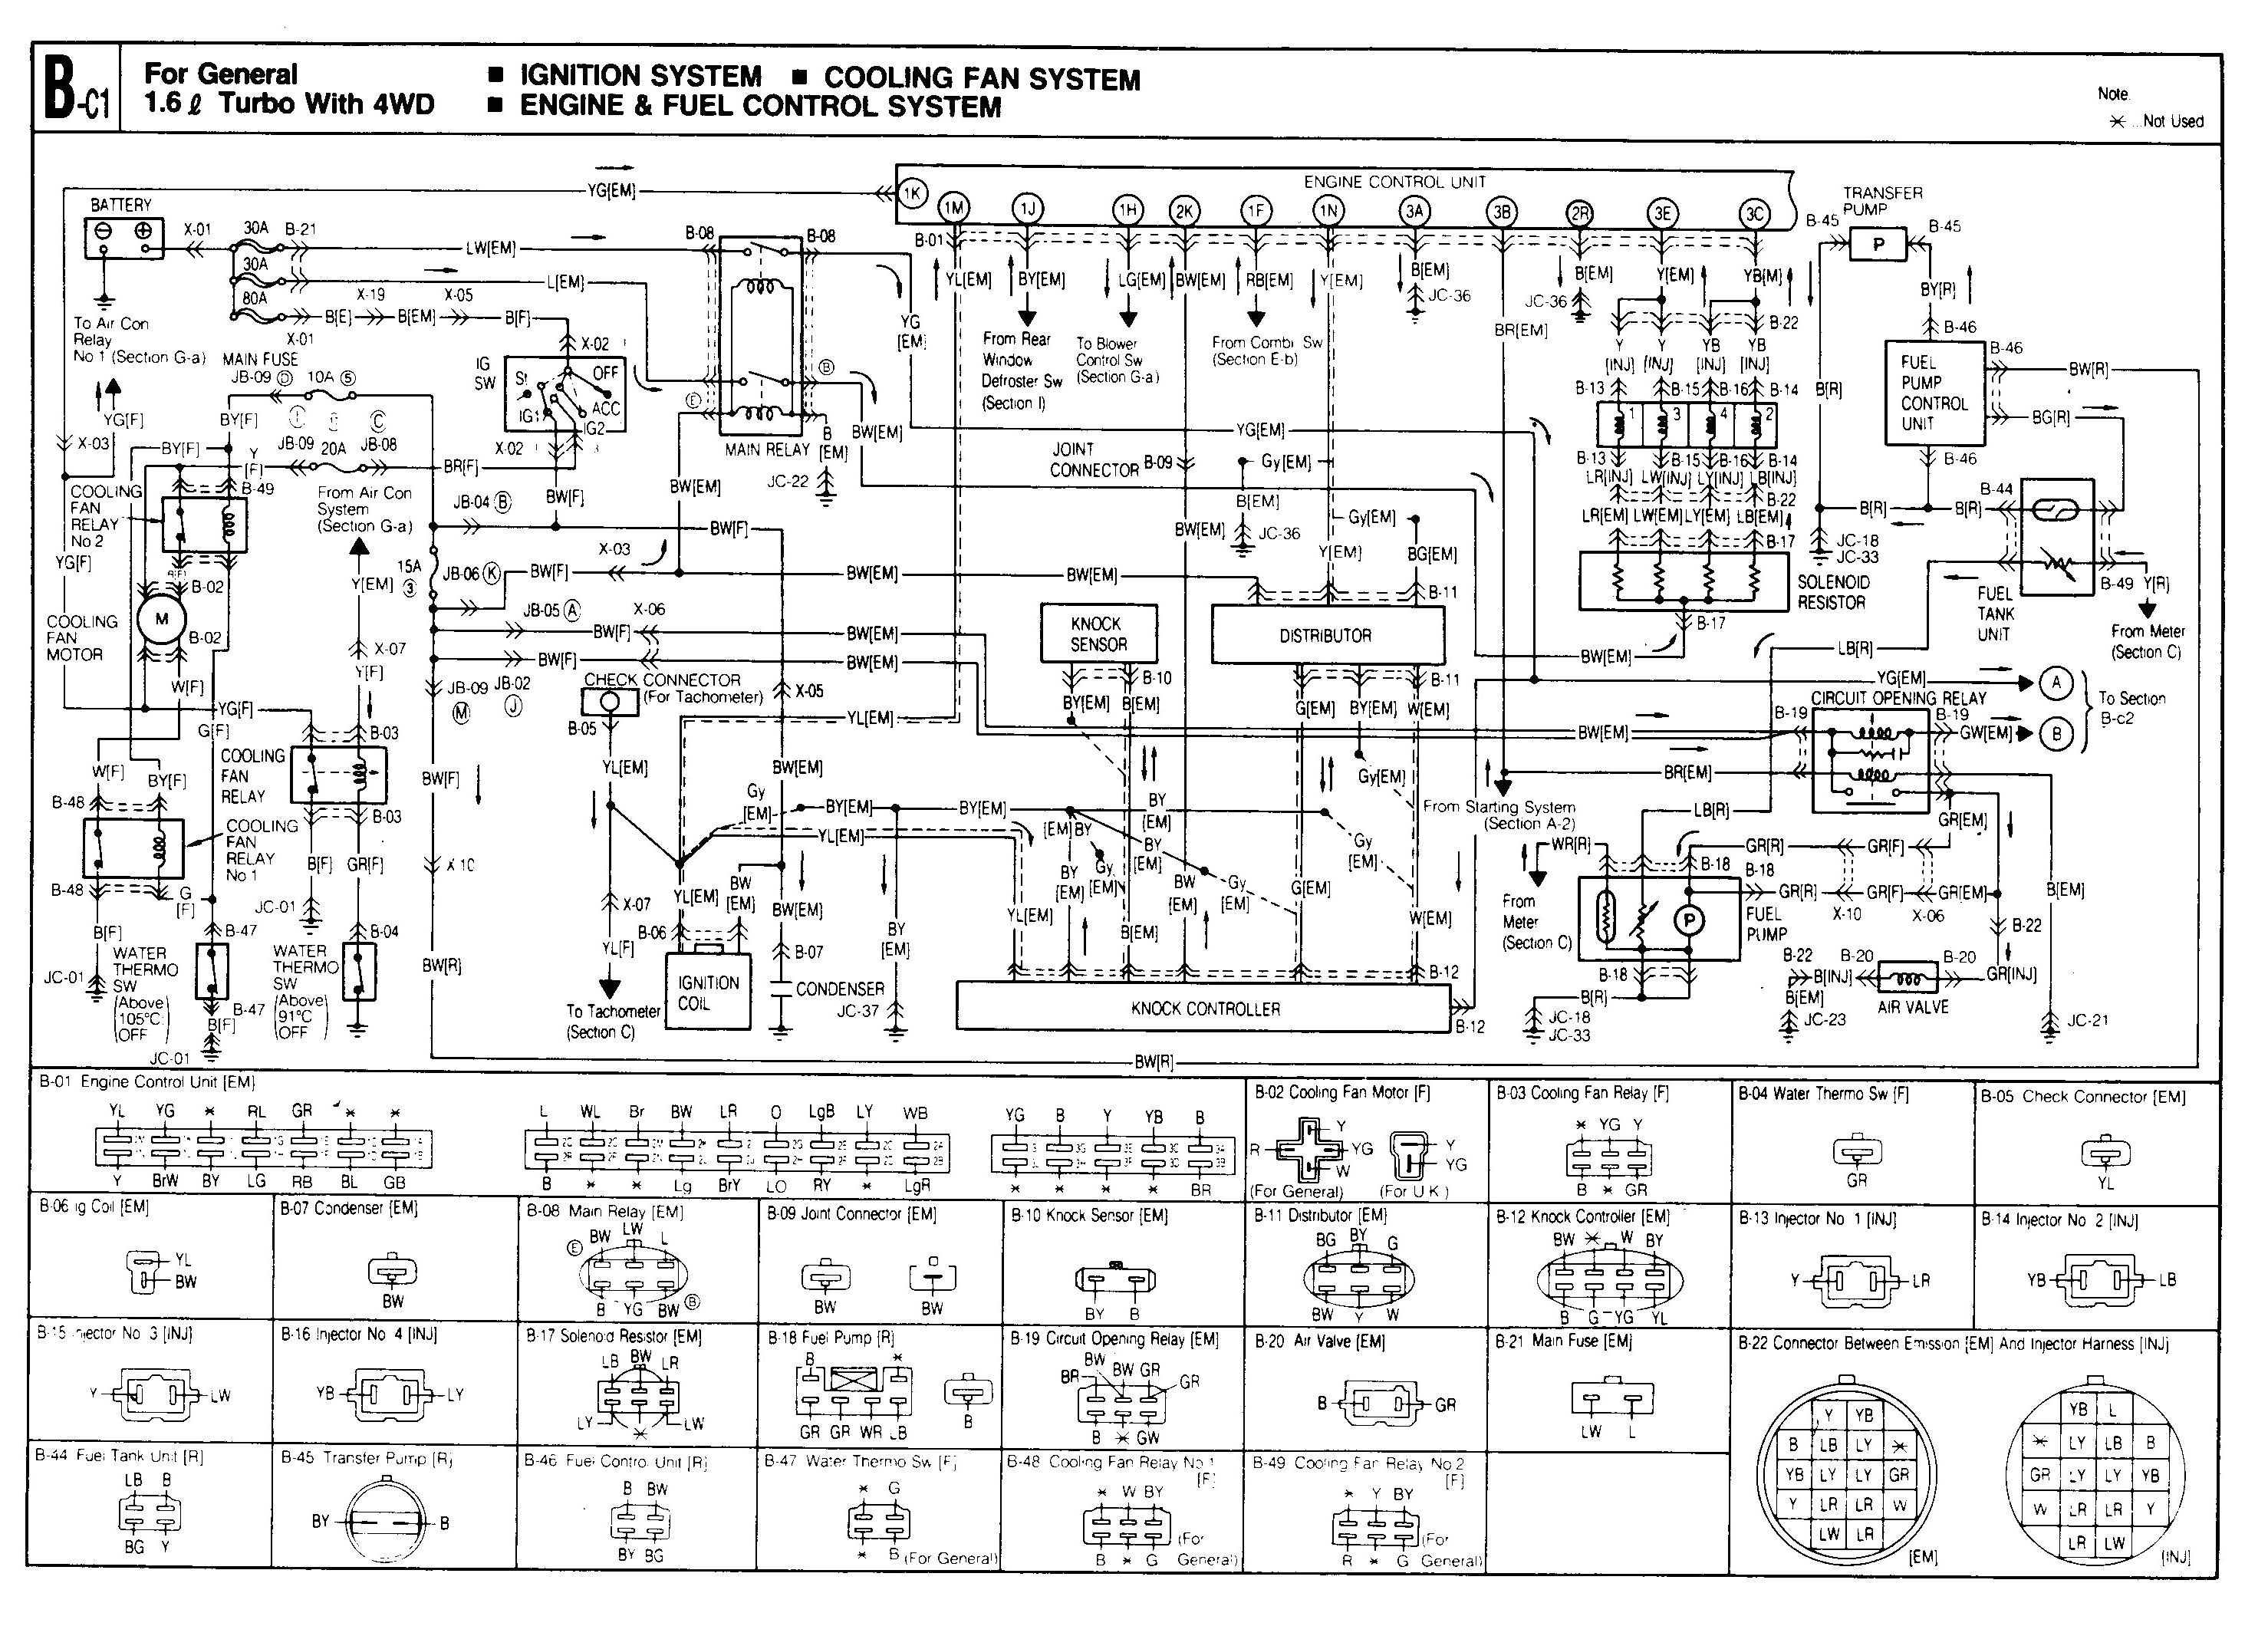 1991 mazda 626 wiring diagram wiring diagram today 1991 mazda 626 wiring diagram wiring diagram paper